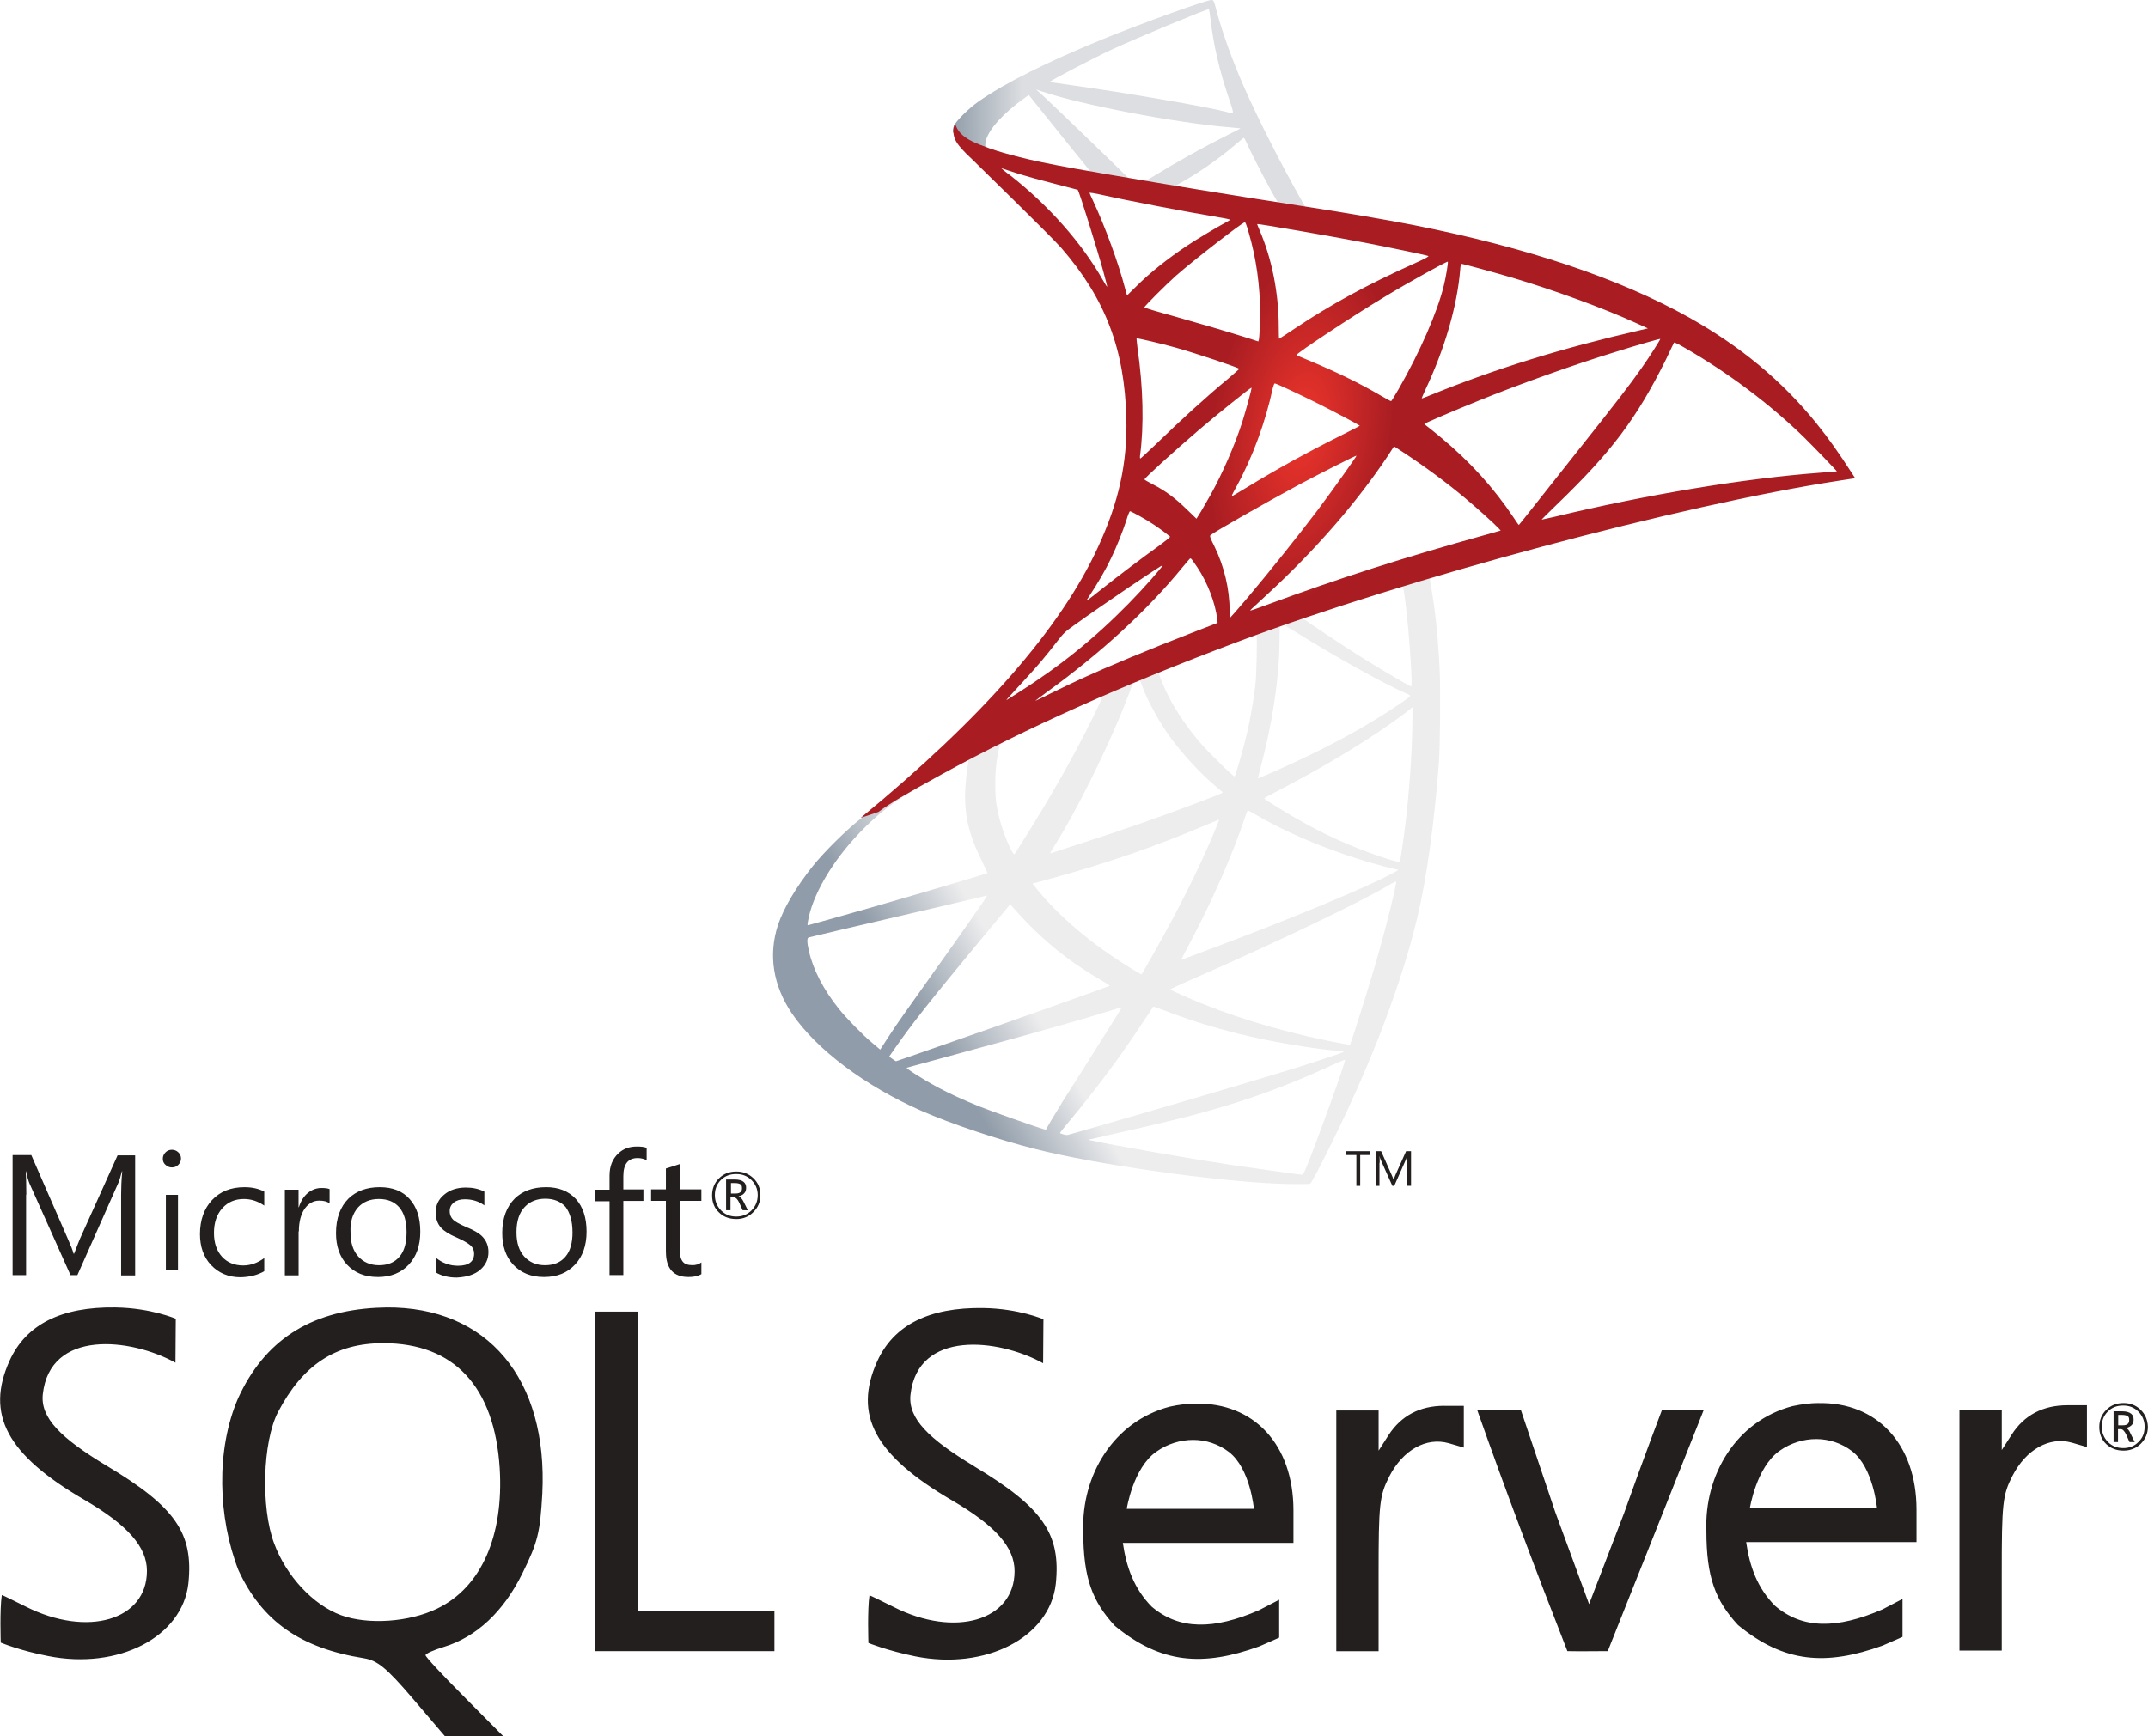 SQL Server data tier applications